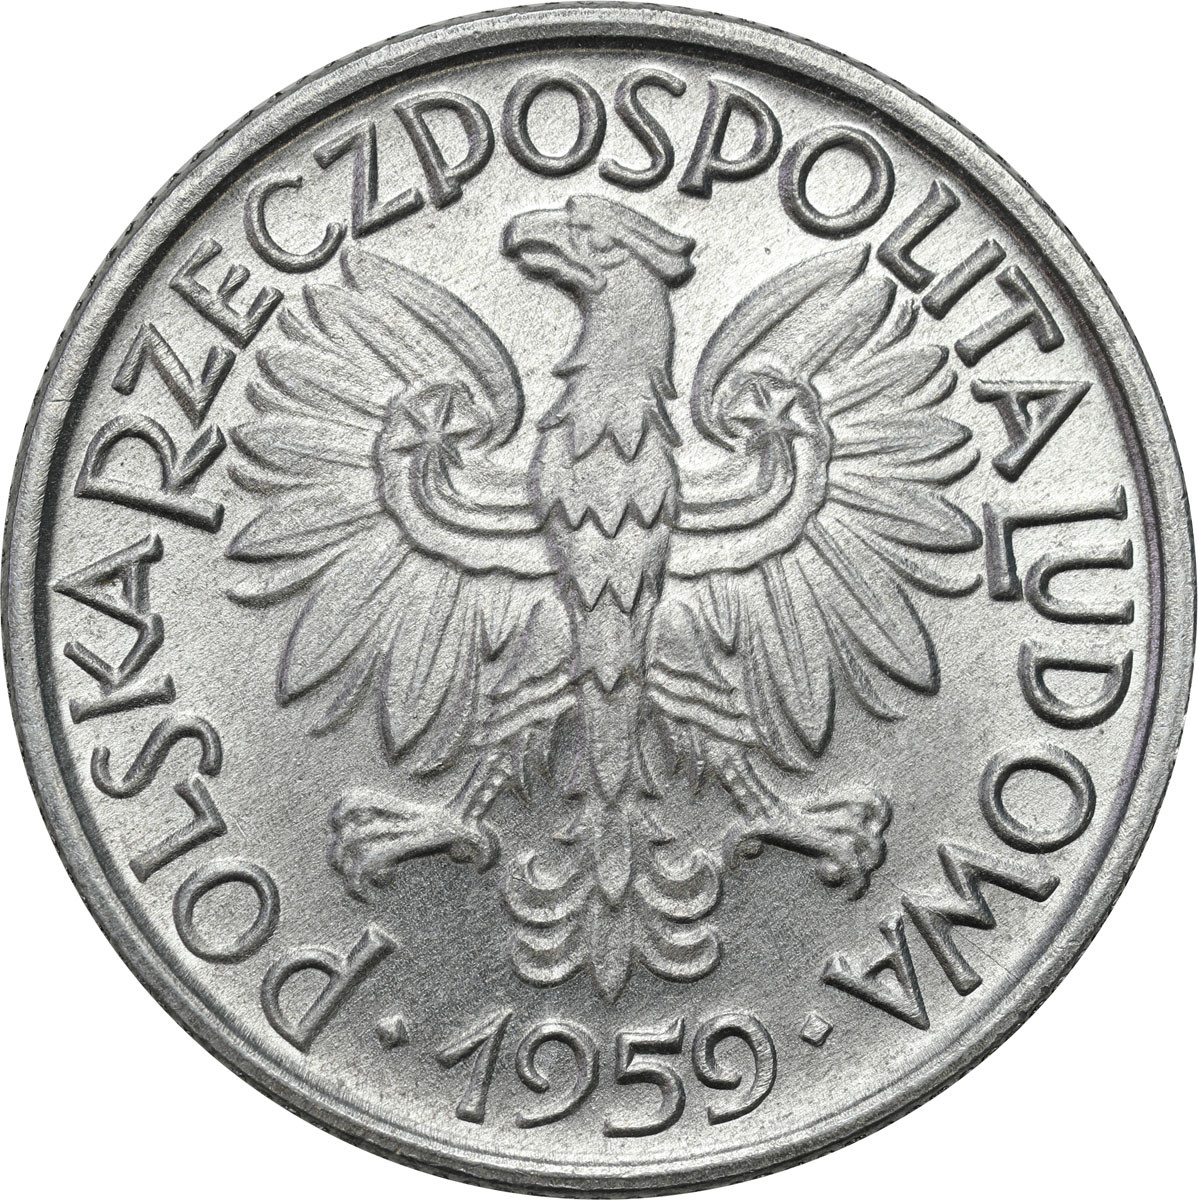 PRL. 2 złote 1959 jagody aluminium - RZADKIE